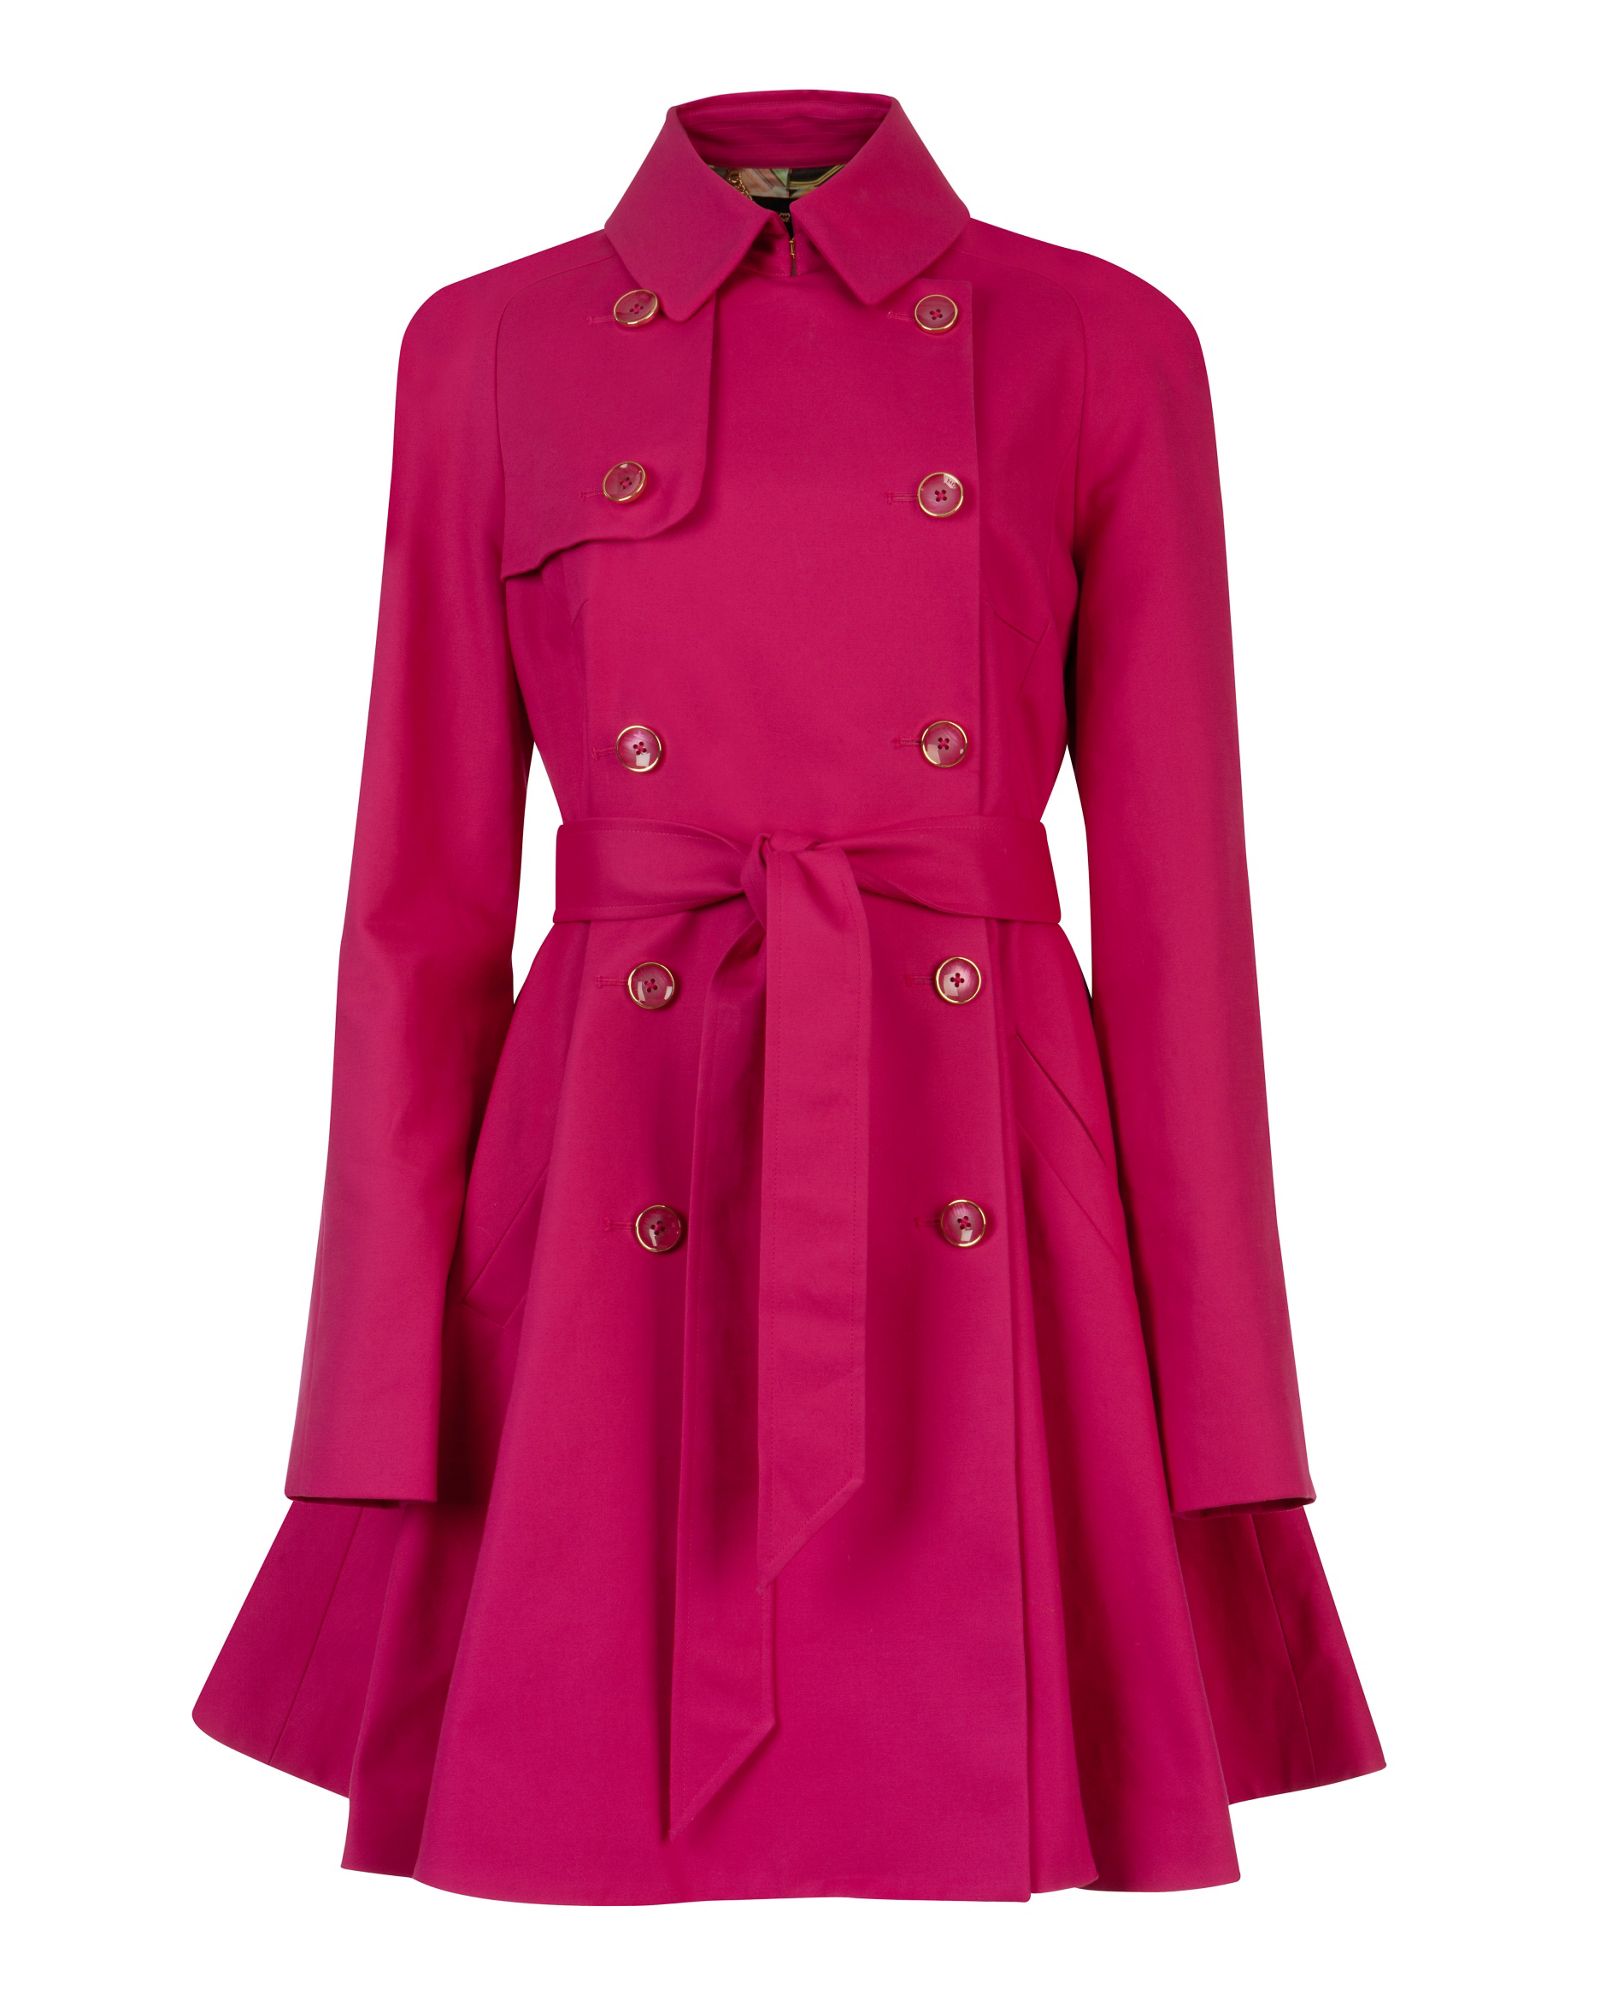 Ted baker Carisa Full Skirt Trench Coat in Pink | Lyst